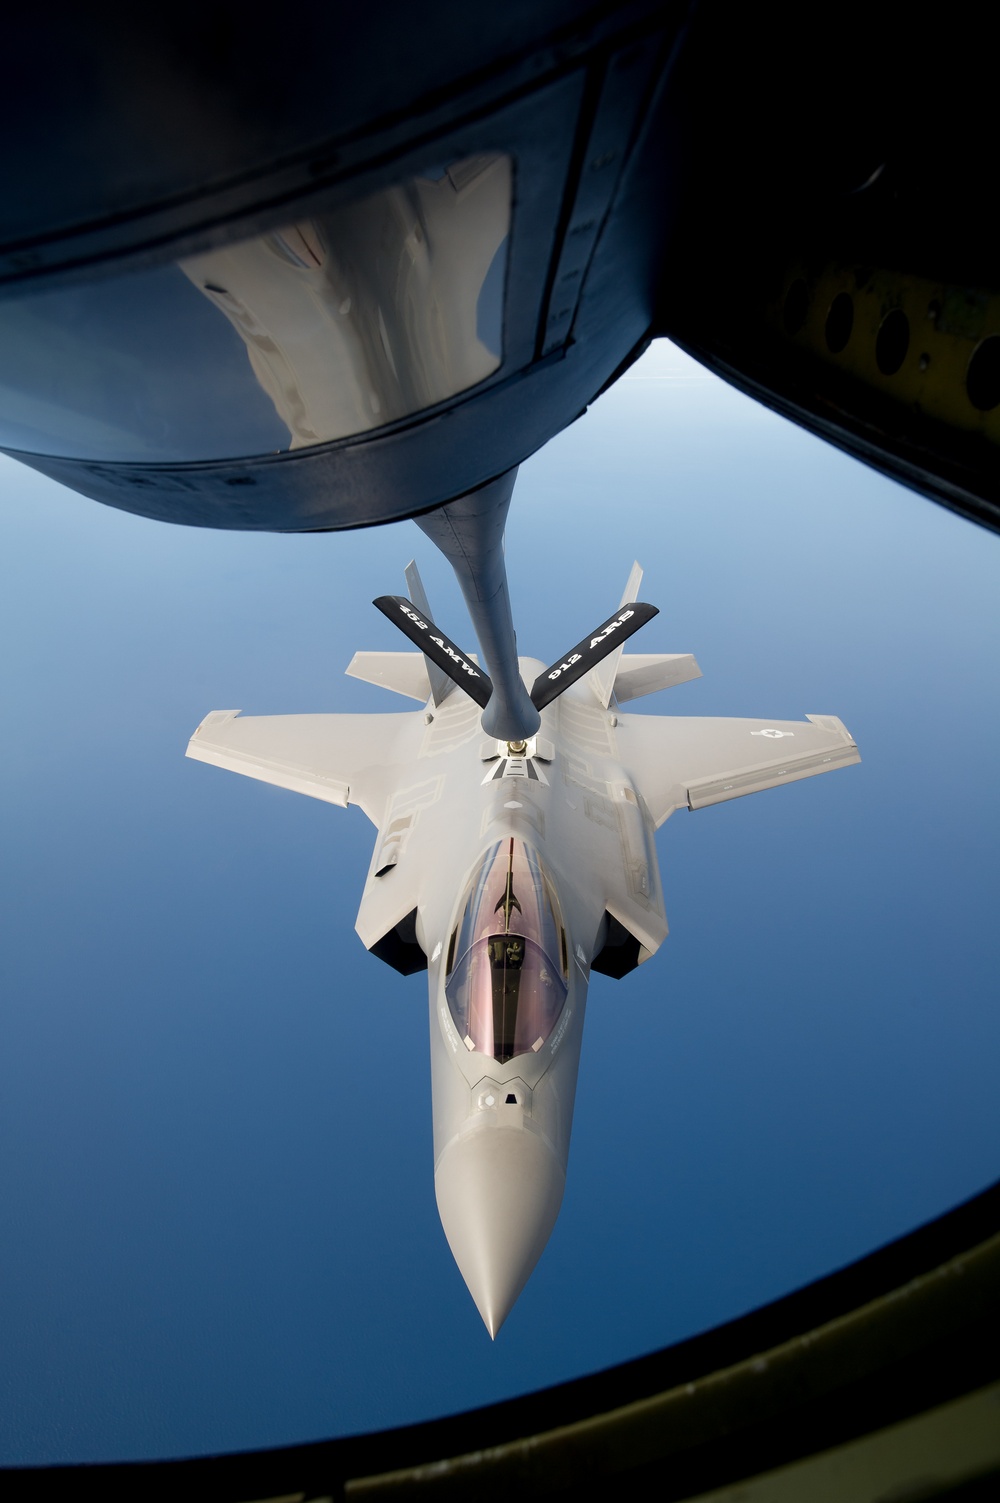 Eglin F-35 pilots experience first refuel